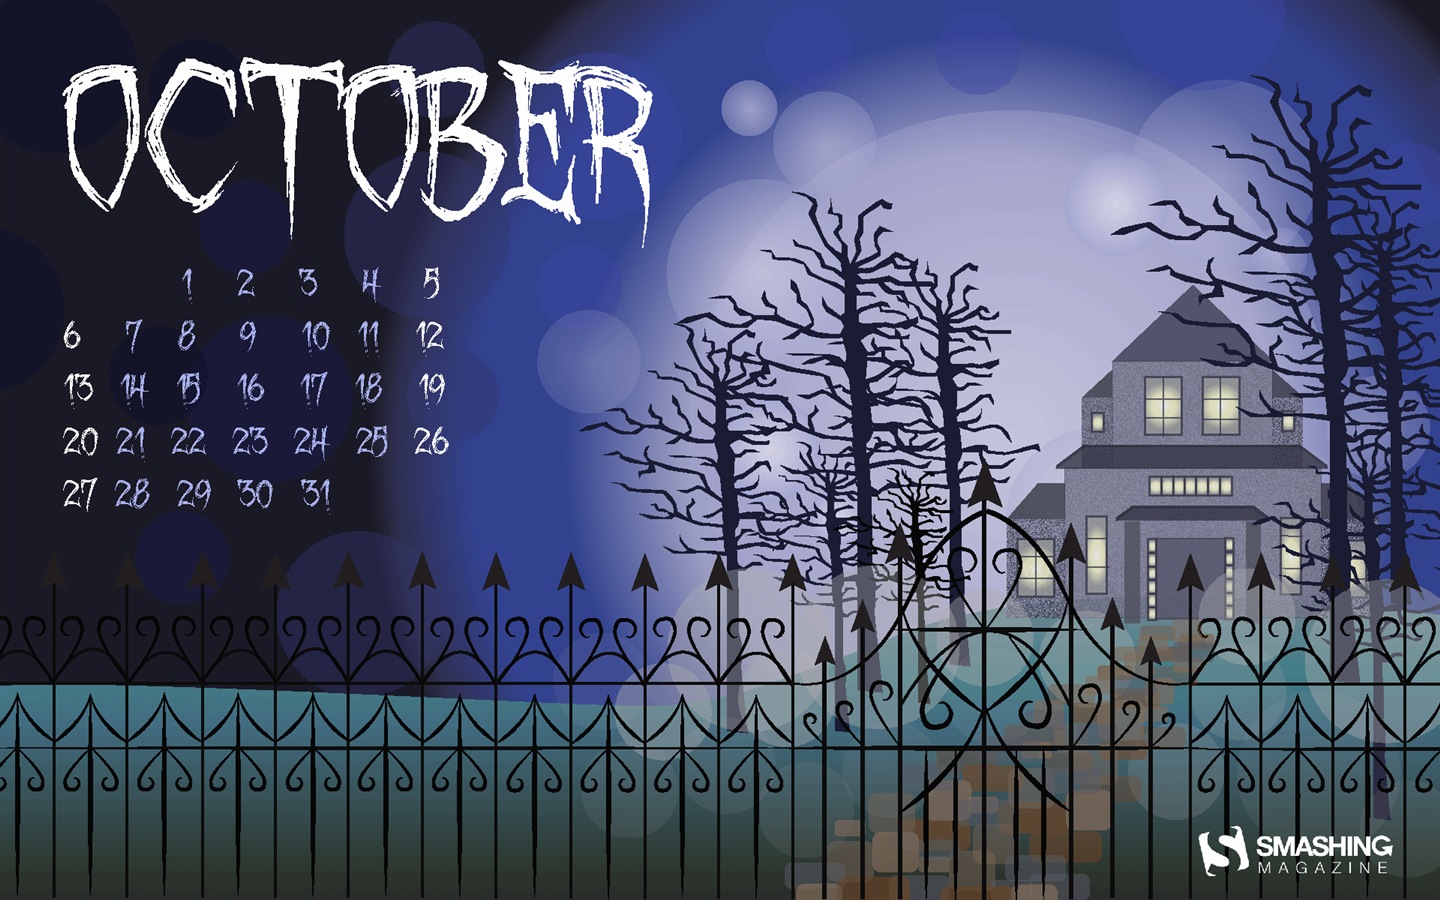 October 2013 calendar wallpaper (2) #1 - 1440x900